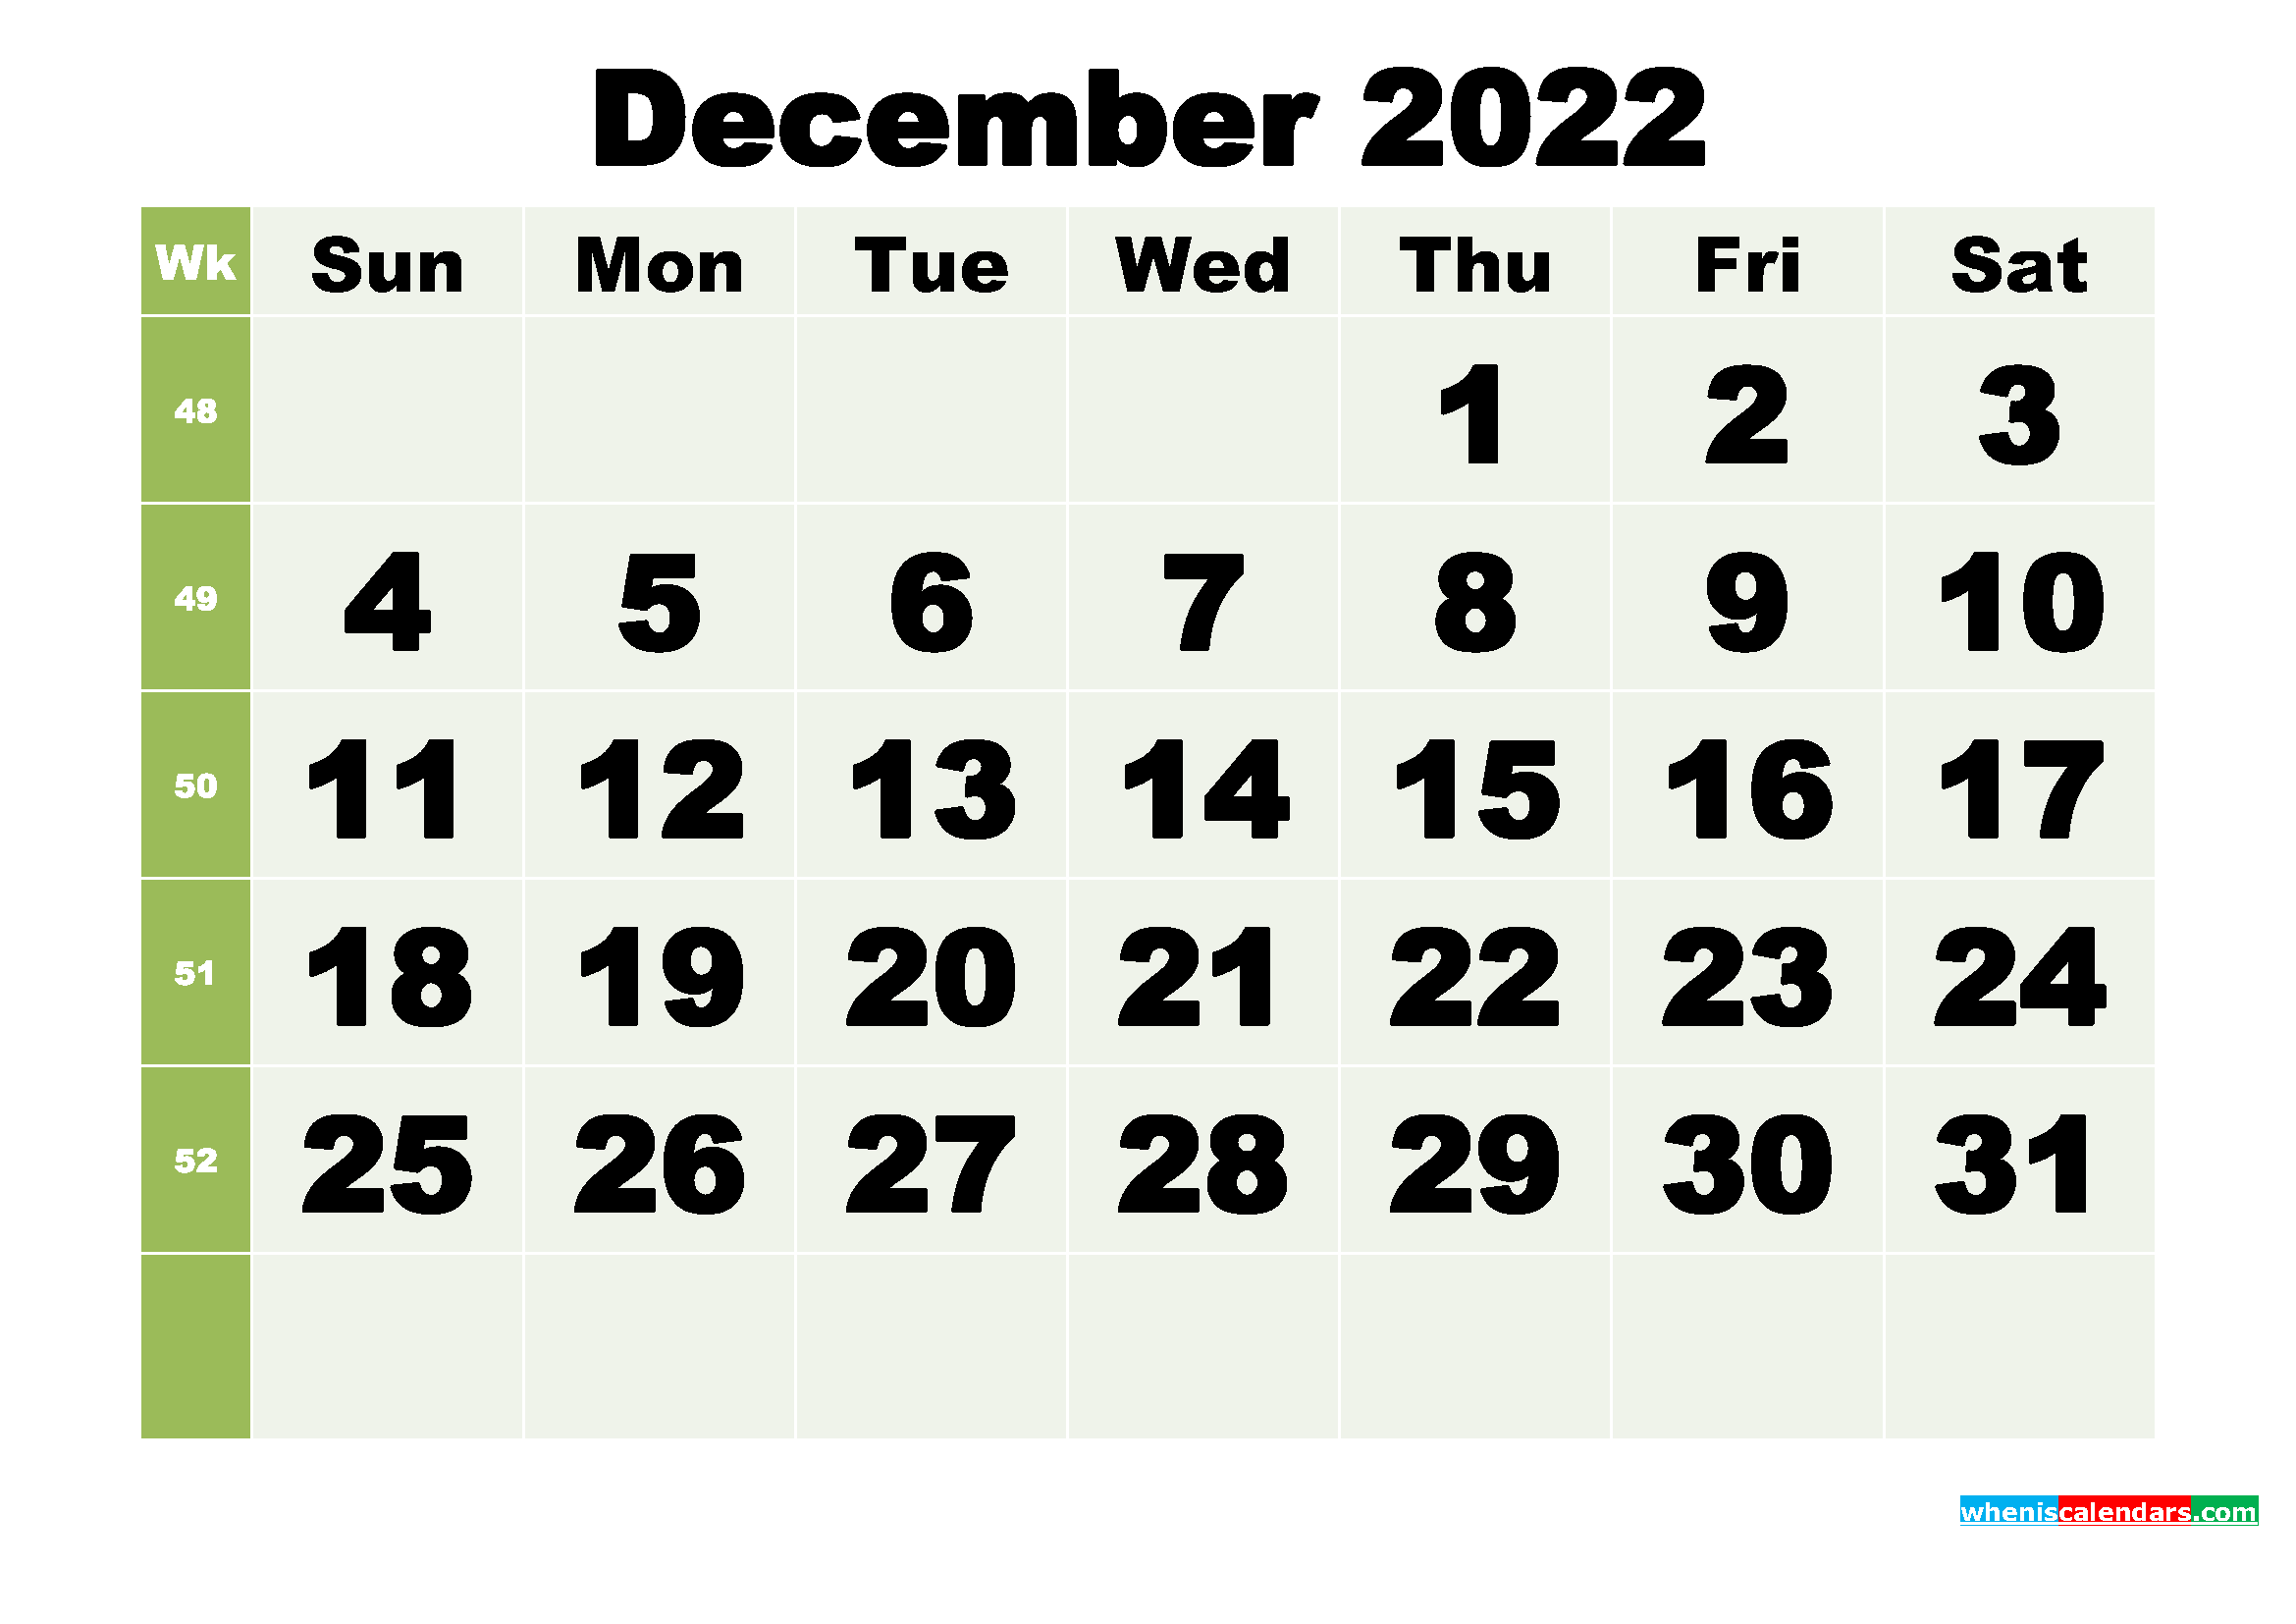 December 2022 Printable Calendar Template